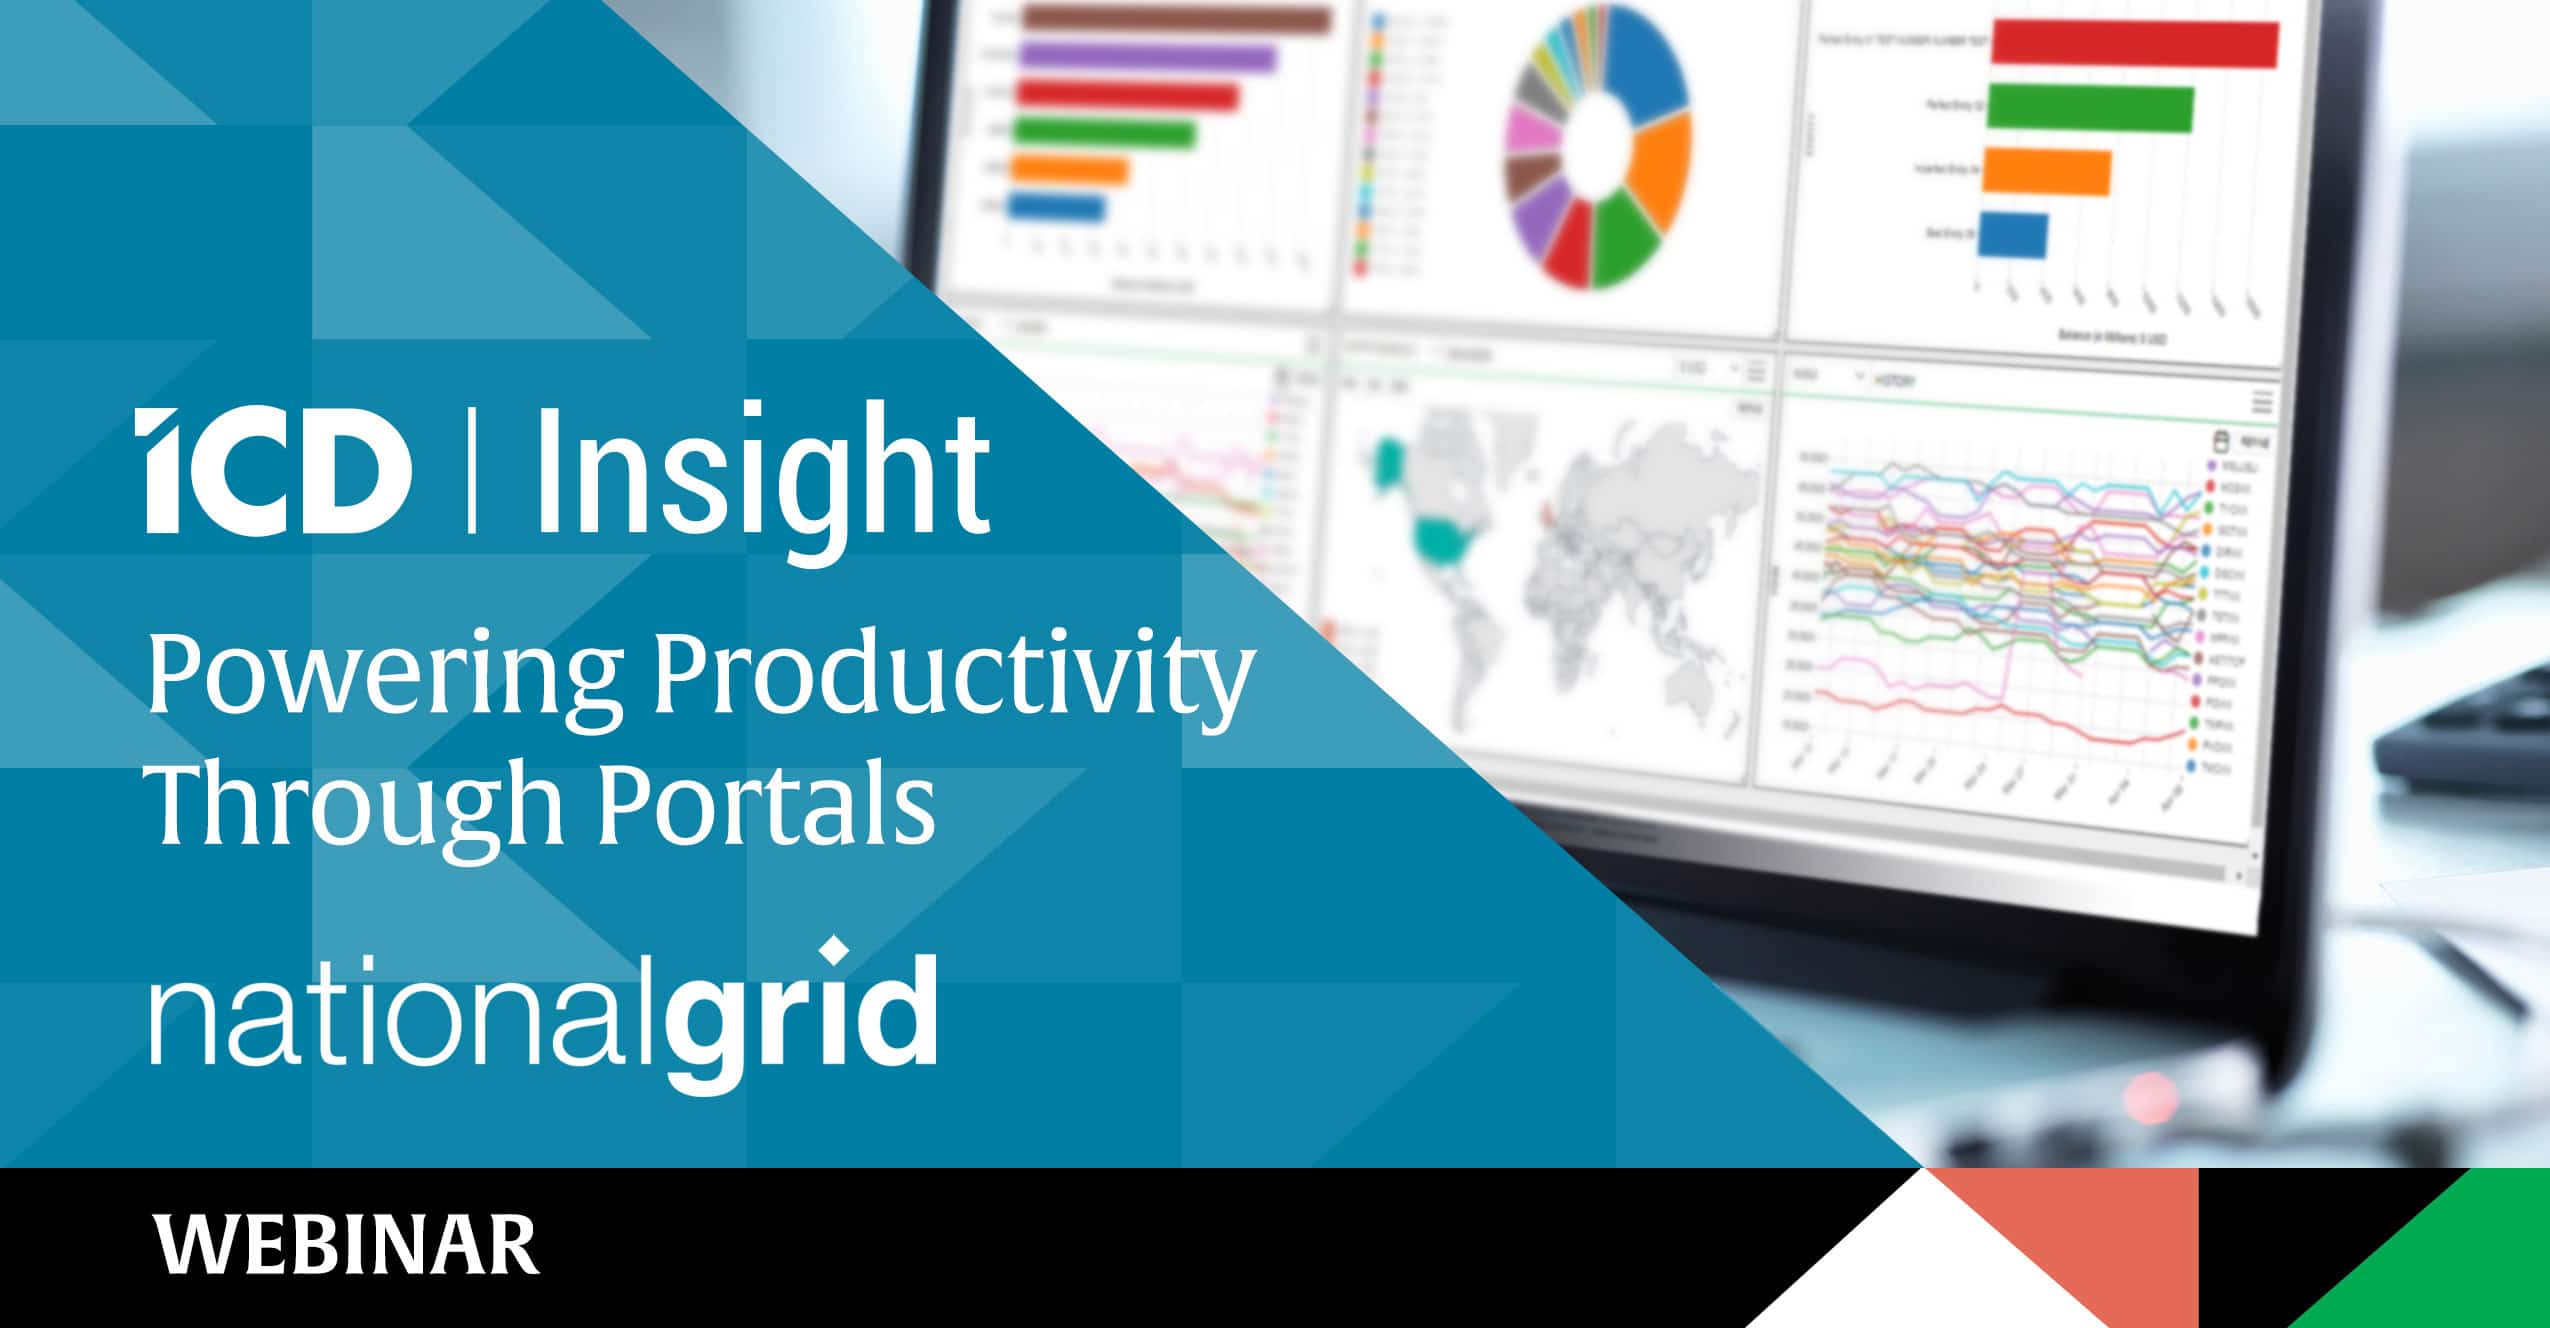 ICD Insight Webinar: Powering Productivity Through Portals